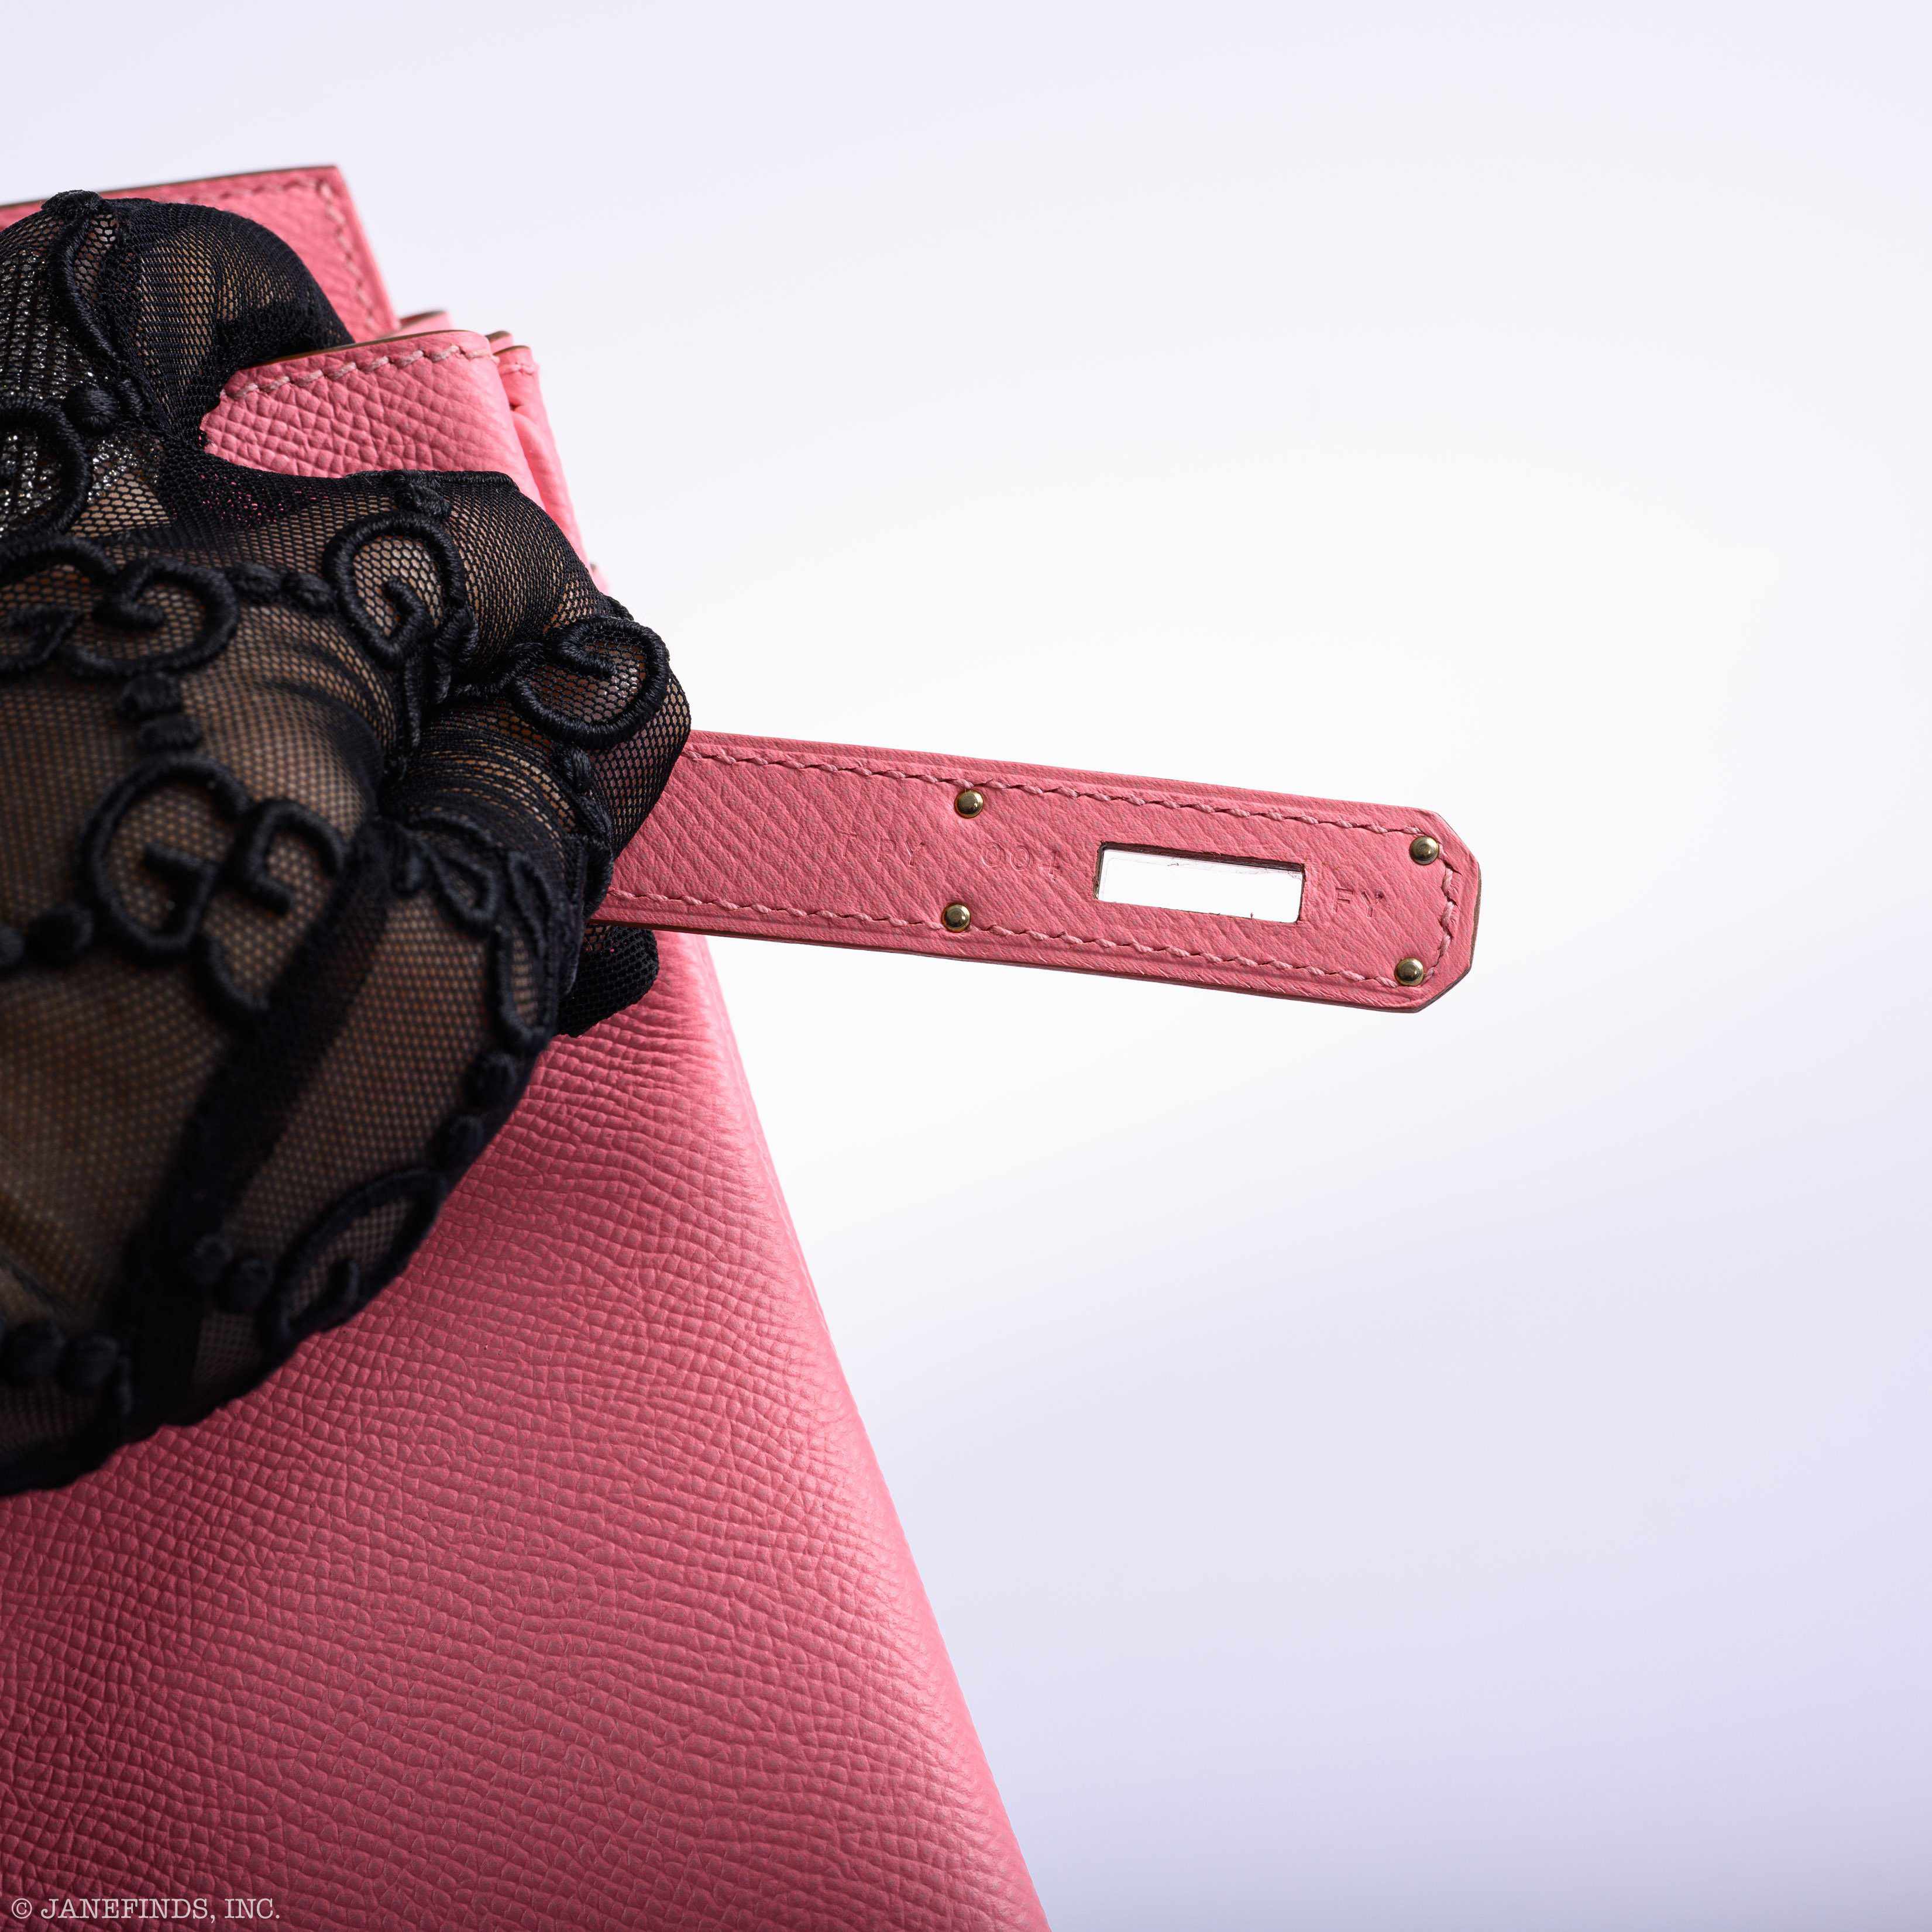 Hermès Birkin 35 Rose Confetti Epsom Palladium Hardware - T